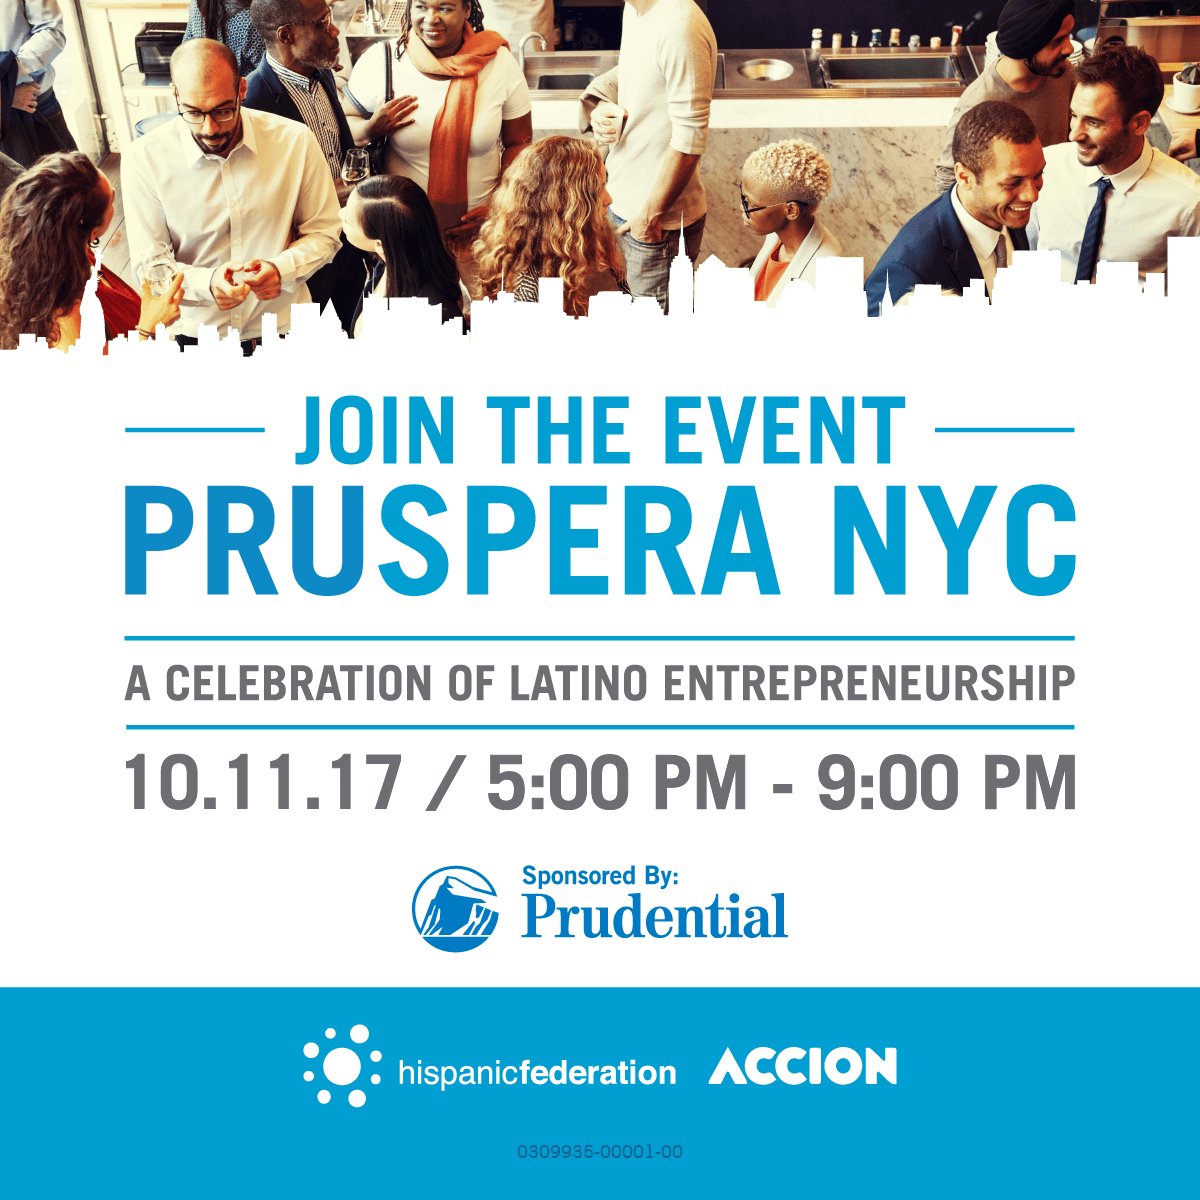 Join Me at #PrusperaNYC A Celebration of #LatinoEntrepreneurship Oct 11 RSVP  prusperanyc.splashthat.com  #Prupárate #ad @dimemedia @Prudential